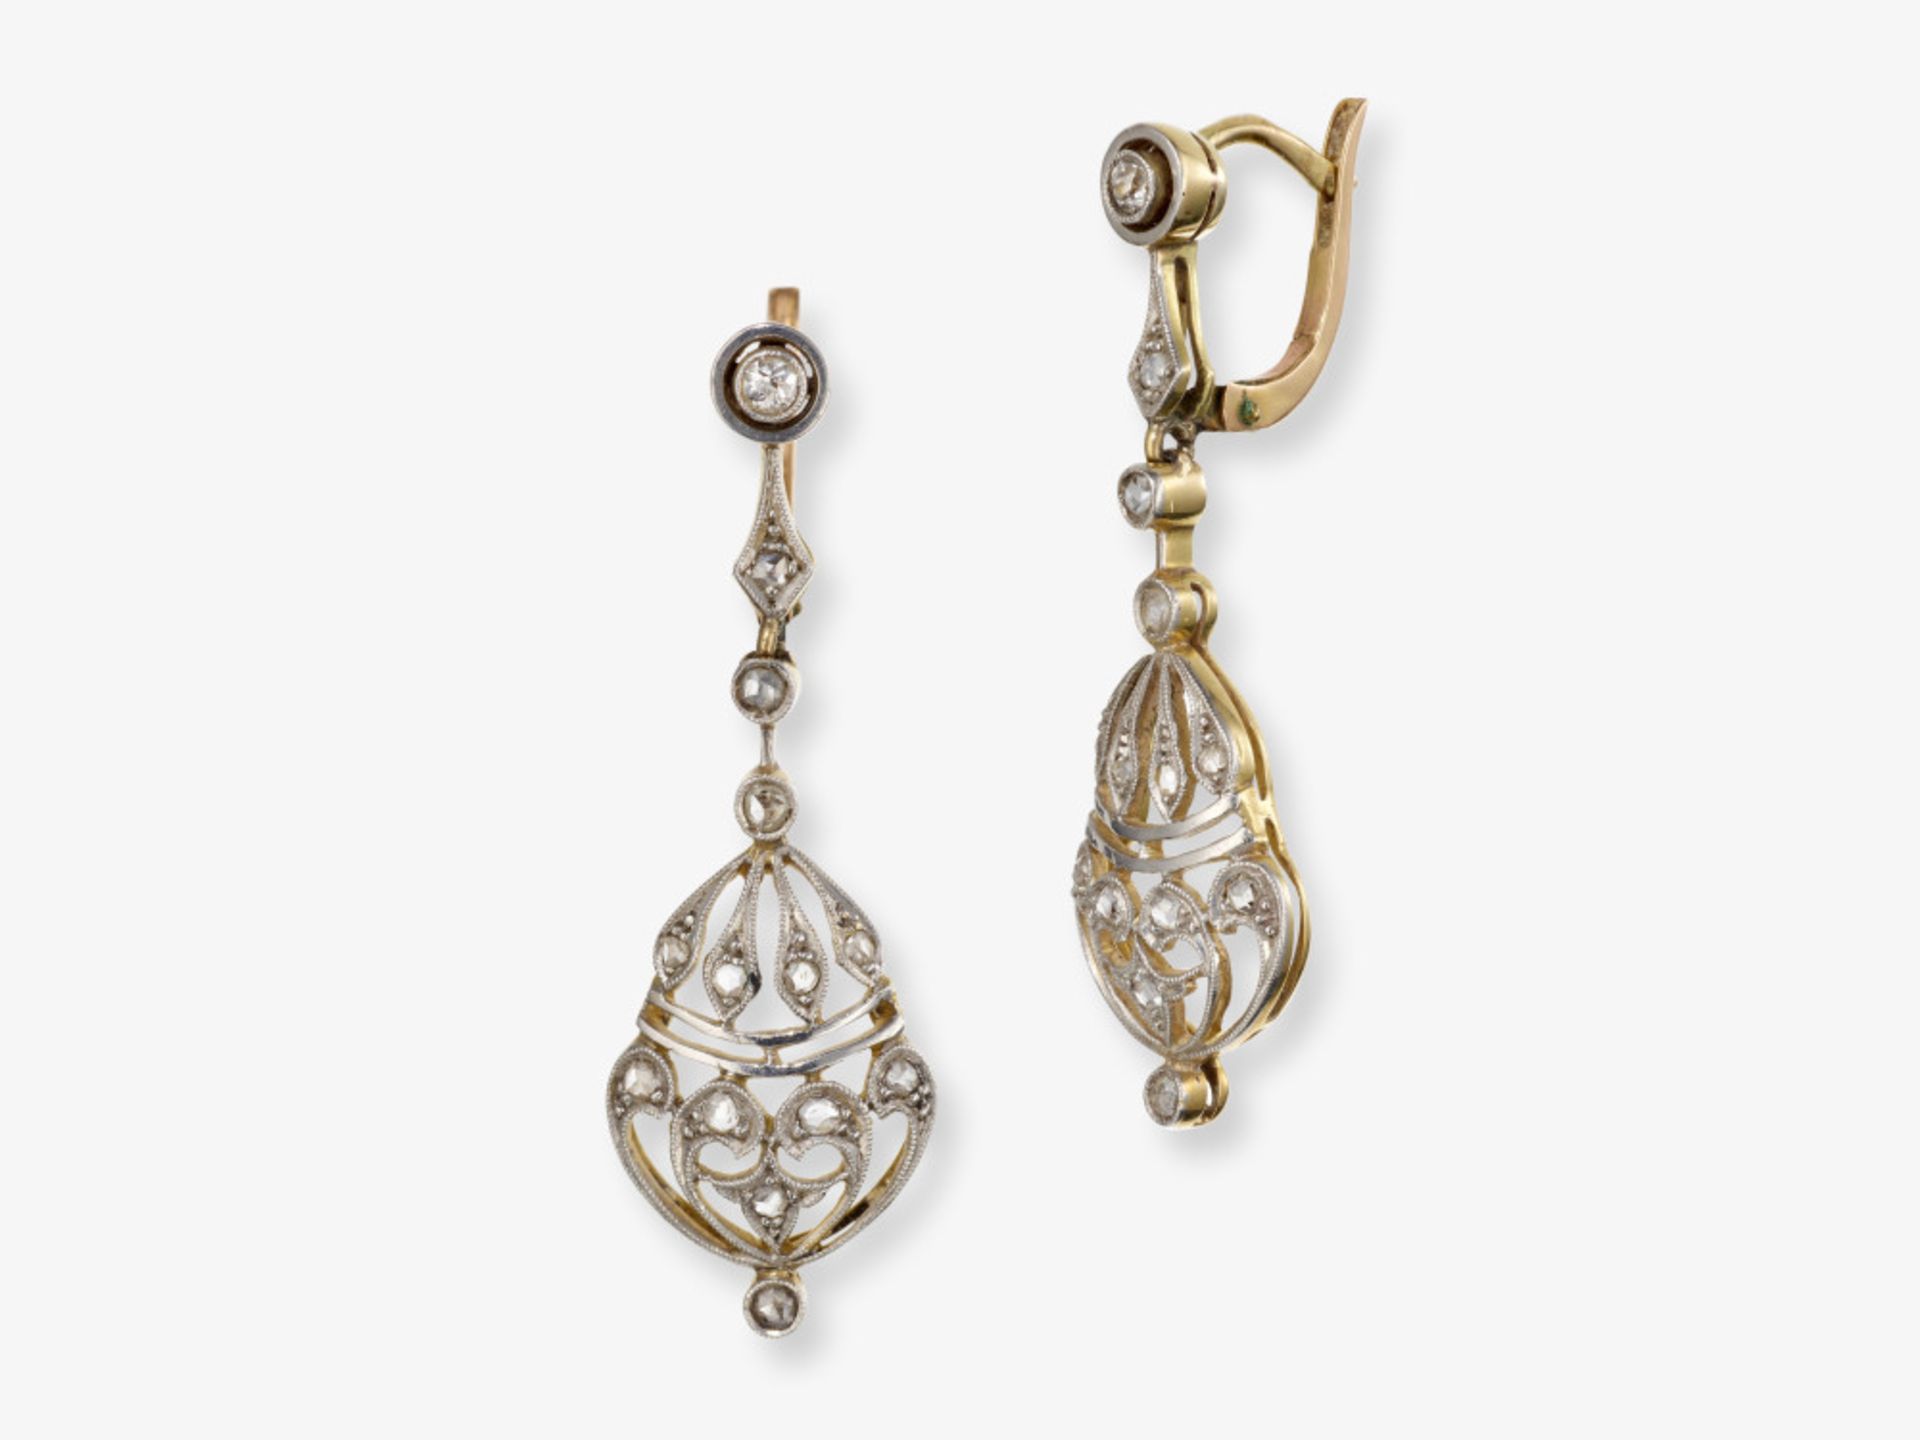 A pair of diamond drop earrings - Image 2 of 2